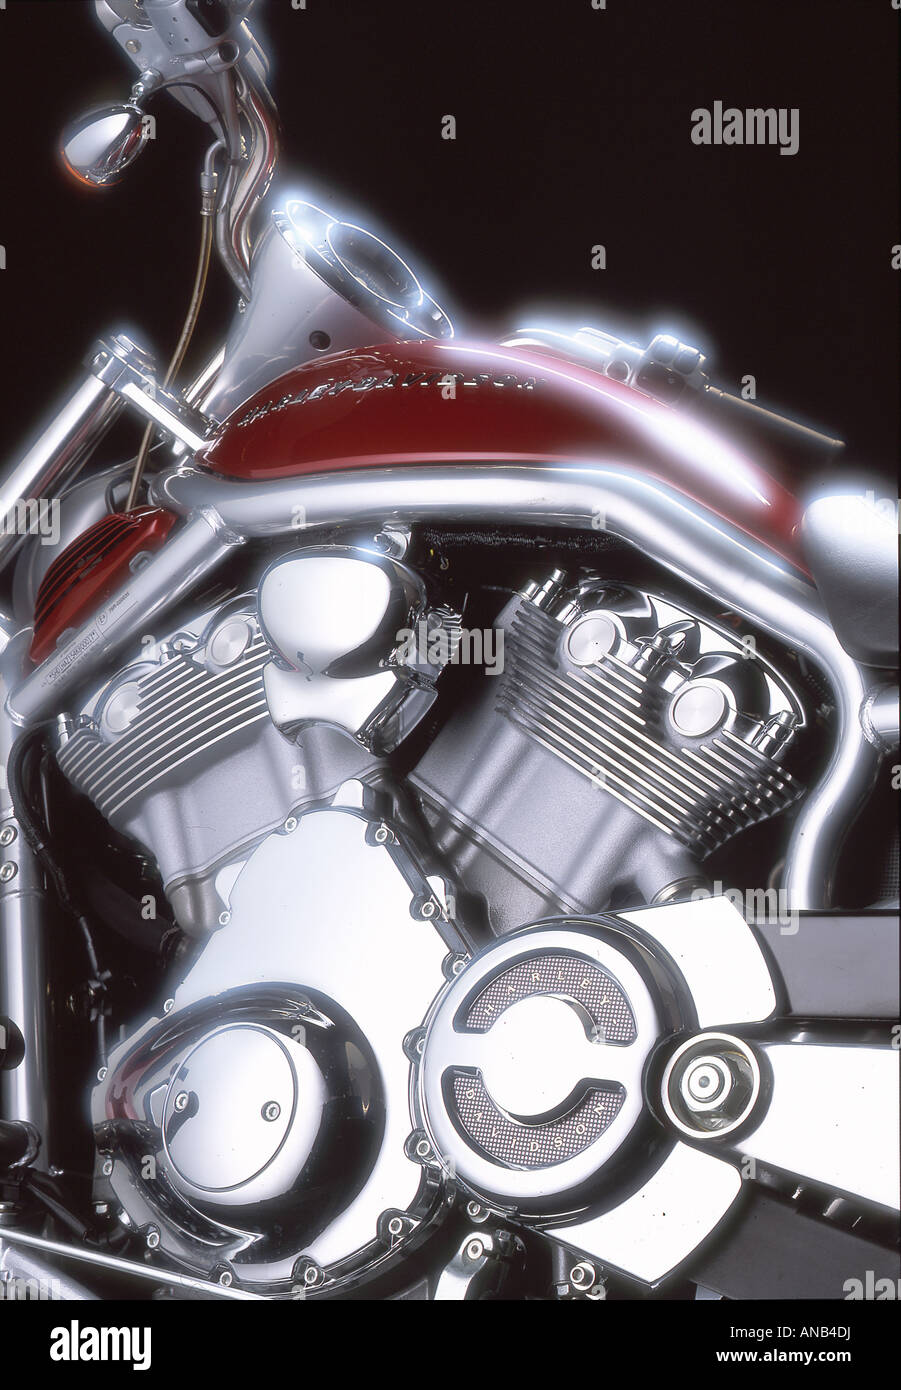 Harley Davison motorcycle Stock Photo